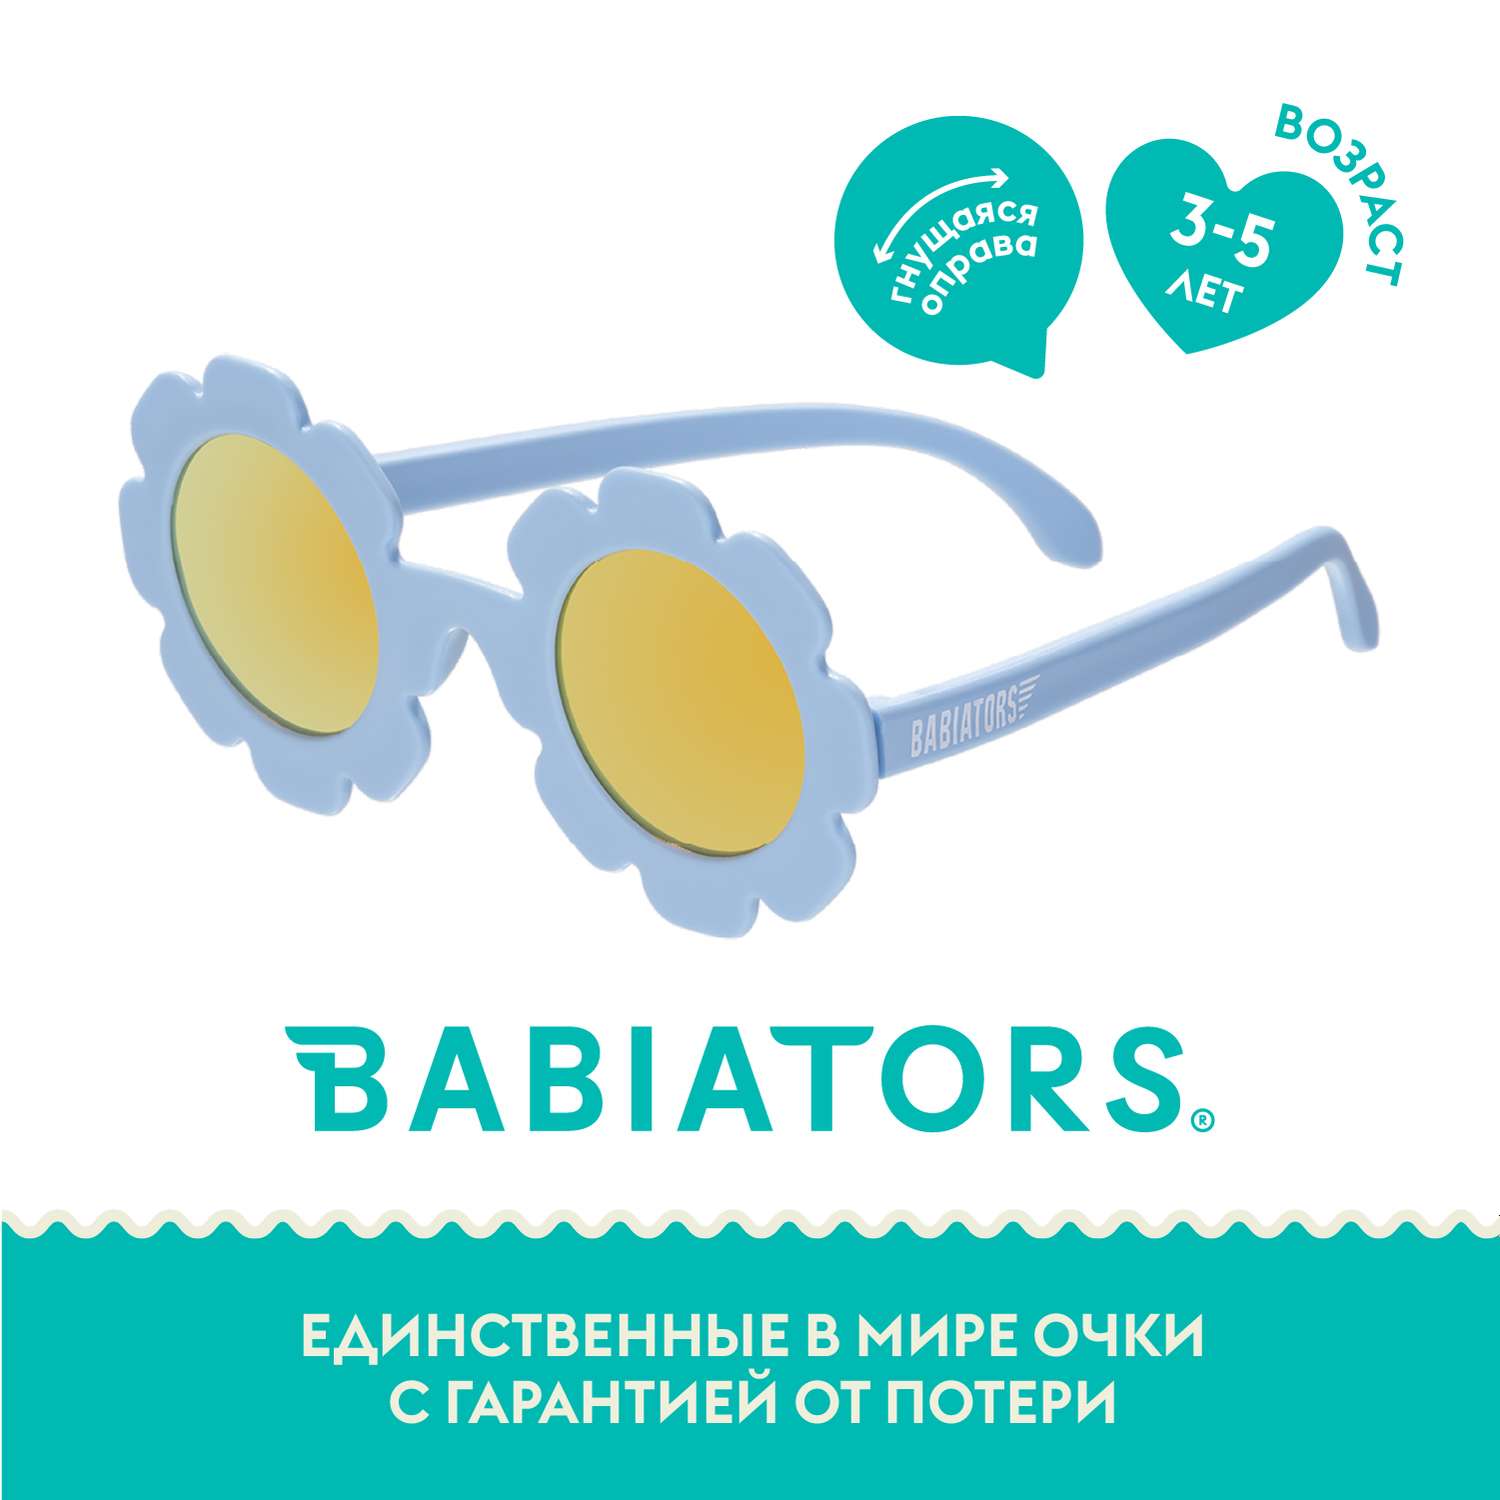 Солнцезащитные очки Babiators Blue series Polarized Flower 3-5 BLU-056 - фото 2